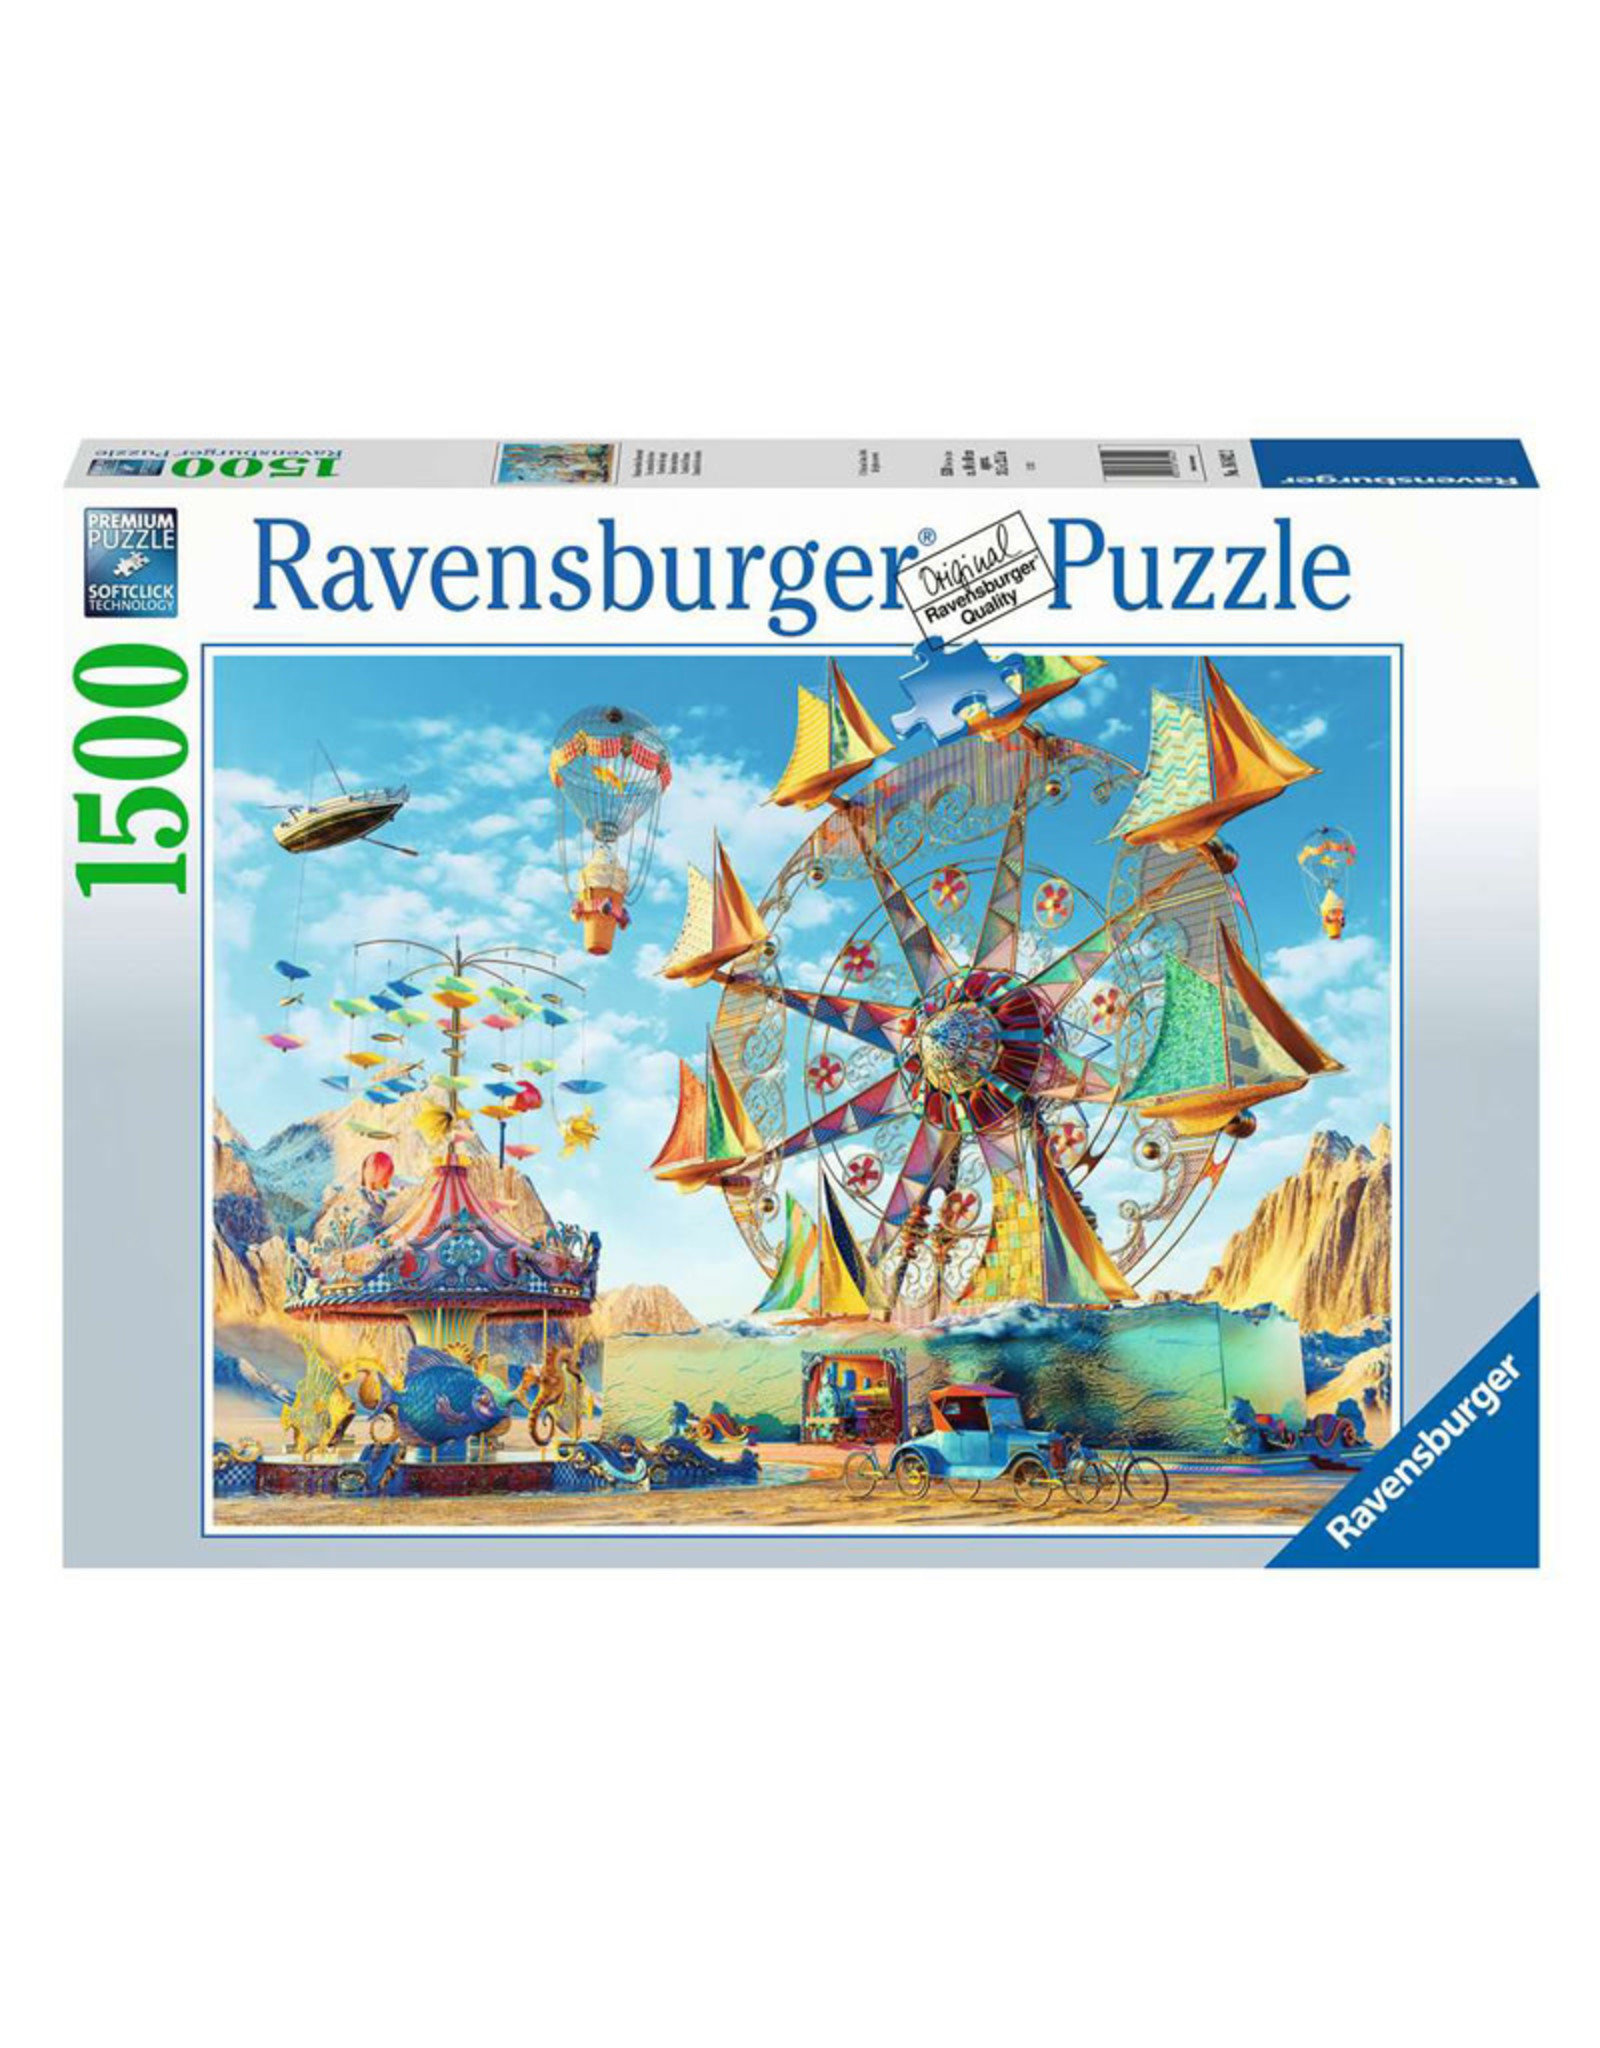 Ravensburger Carnival of Dreams Puzzle (1500 PCS)